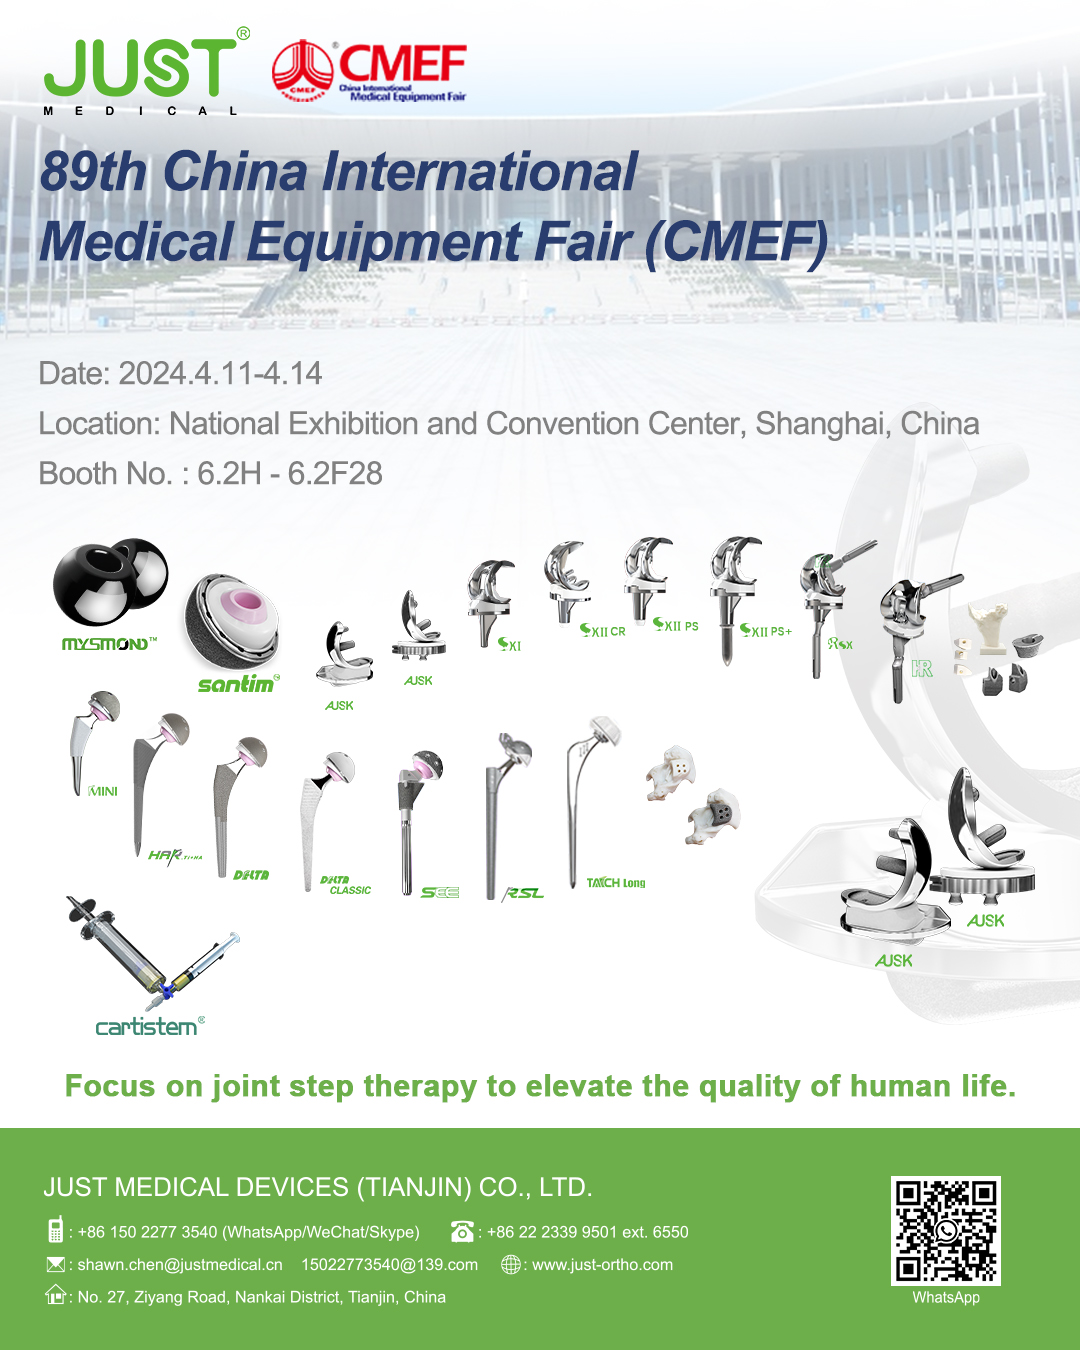 Meet Us at the 89th China International Medical Equipment Fair (CMEF)!